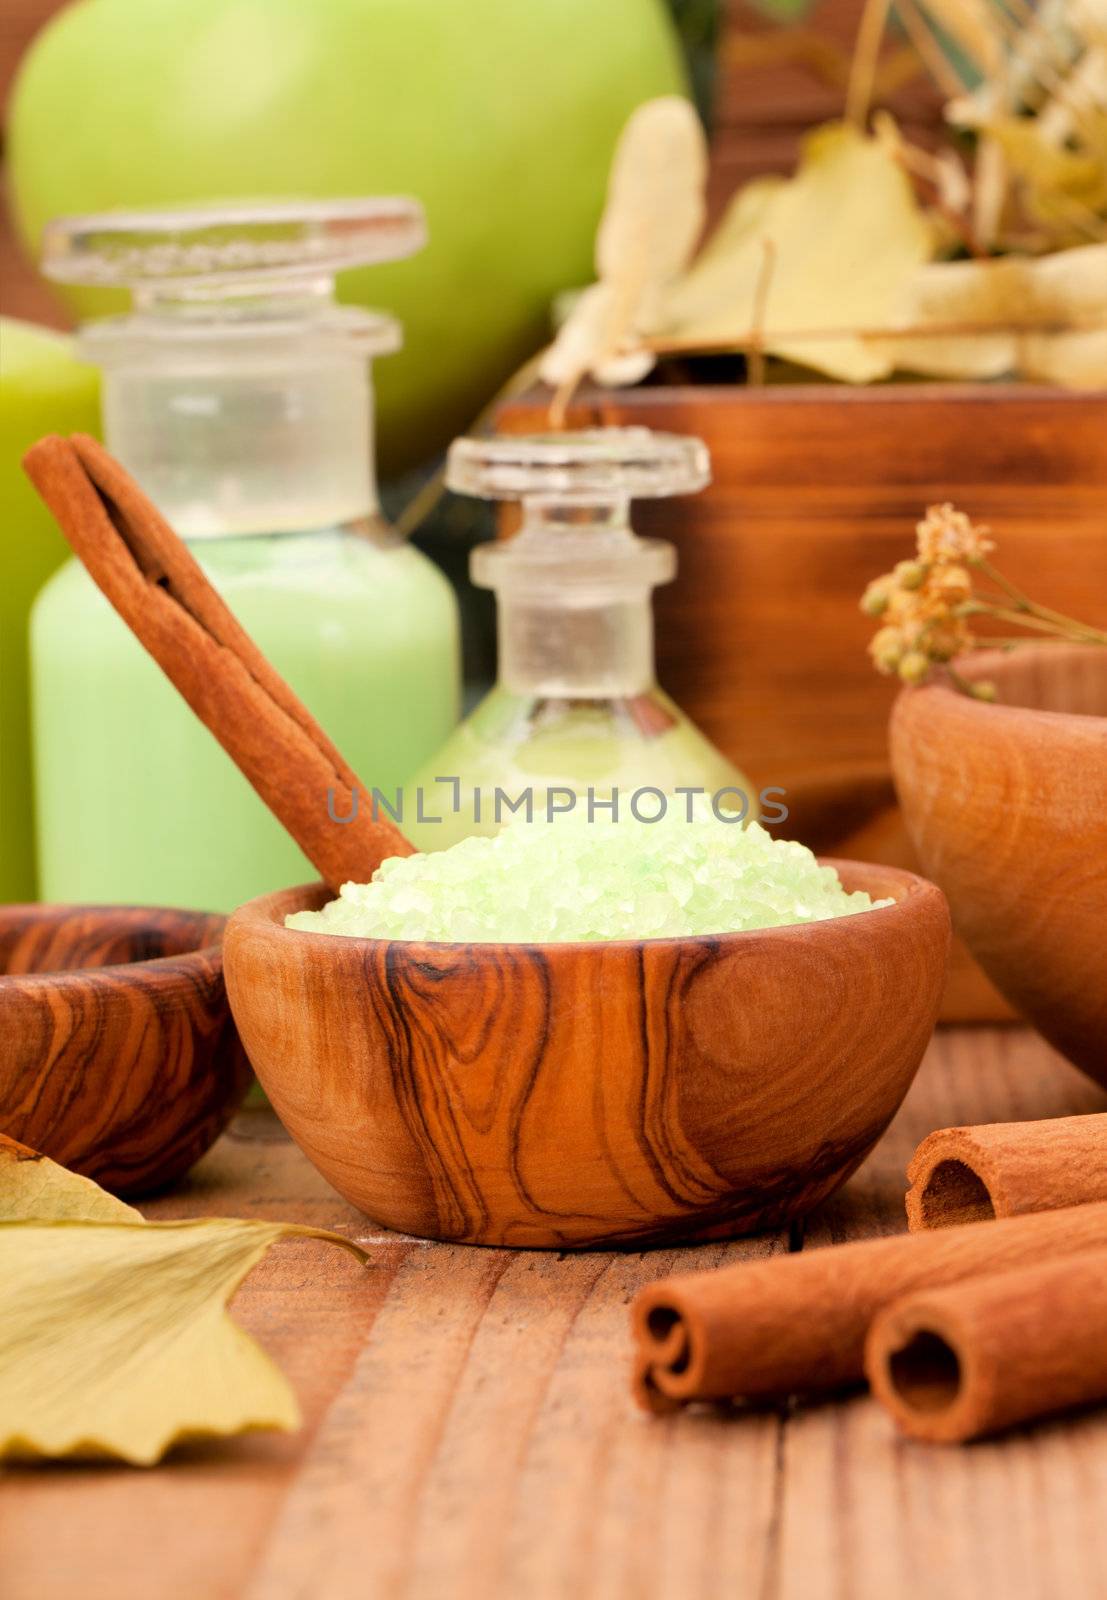 green herbal salt in the wooden bowl.